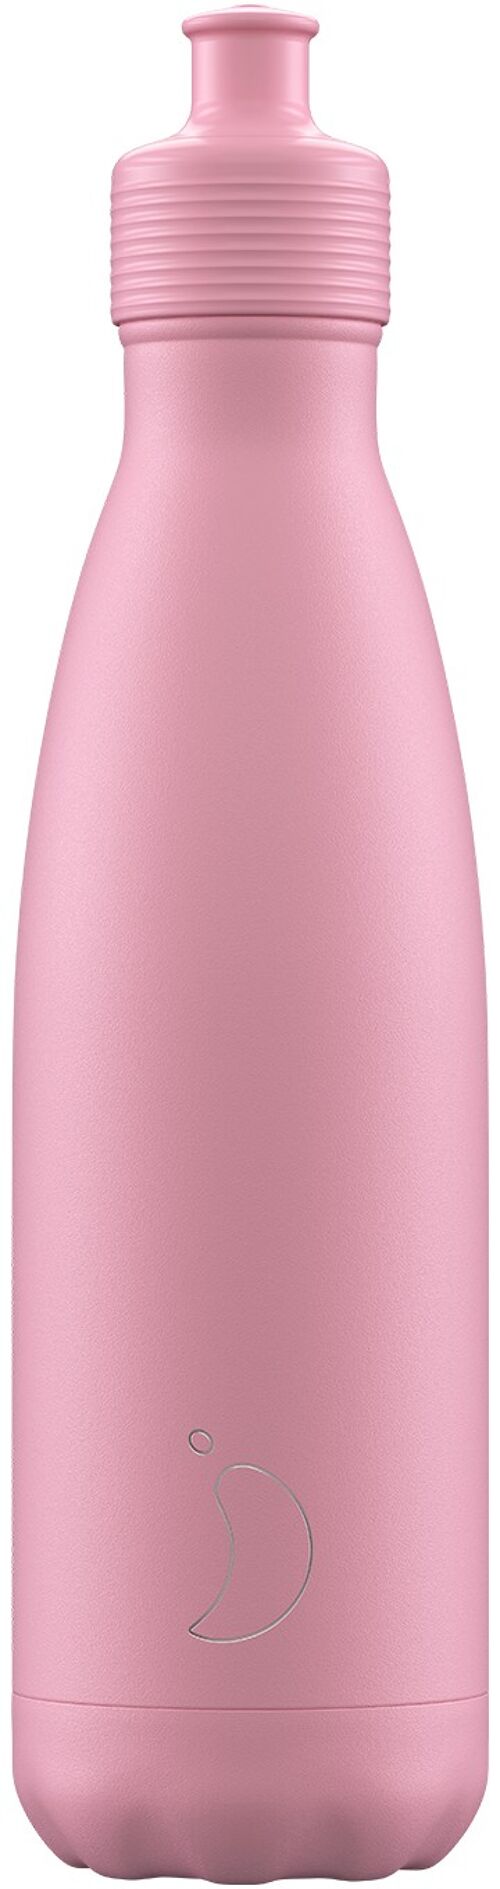 Bottle-500ml-Pastel Pink